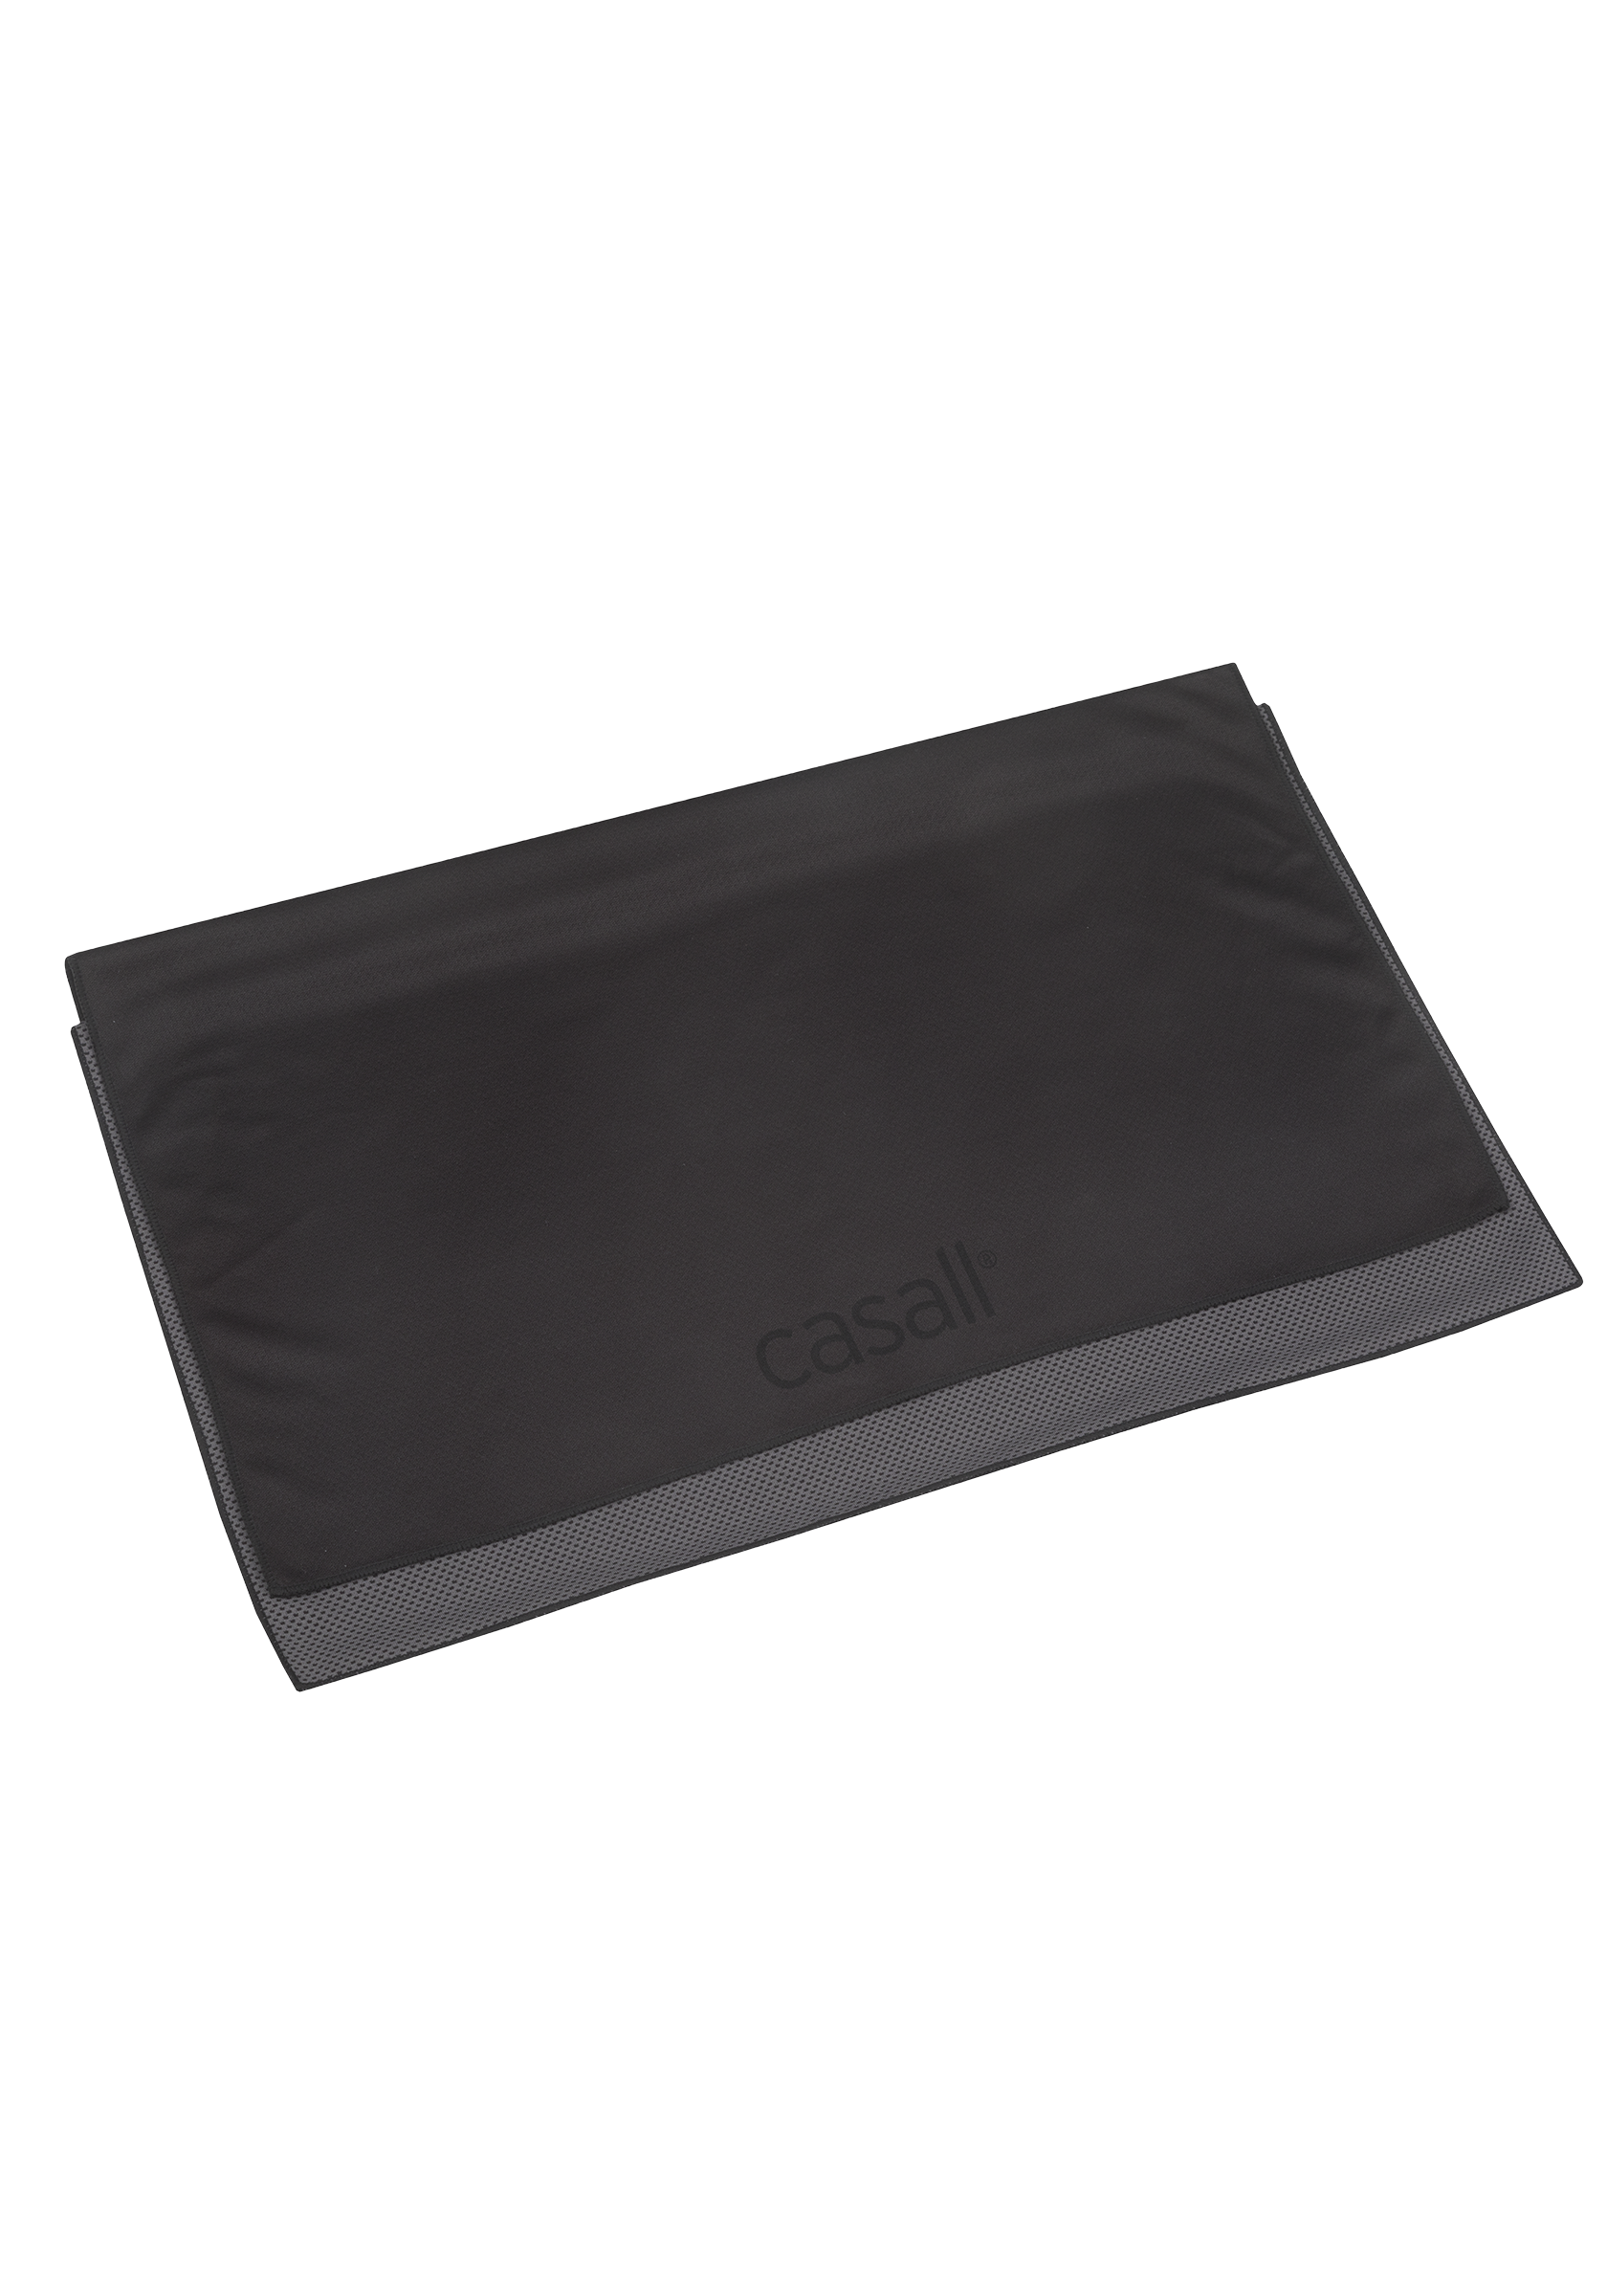 Travel towel 120x70cm Black/grey